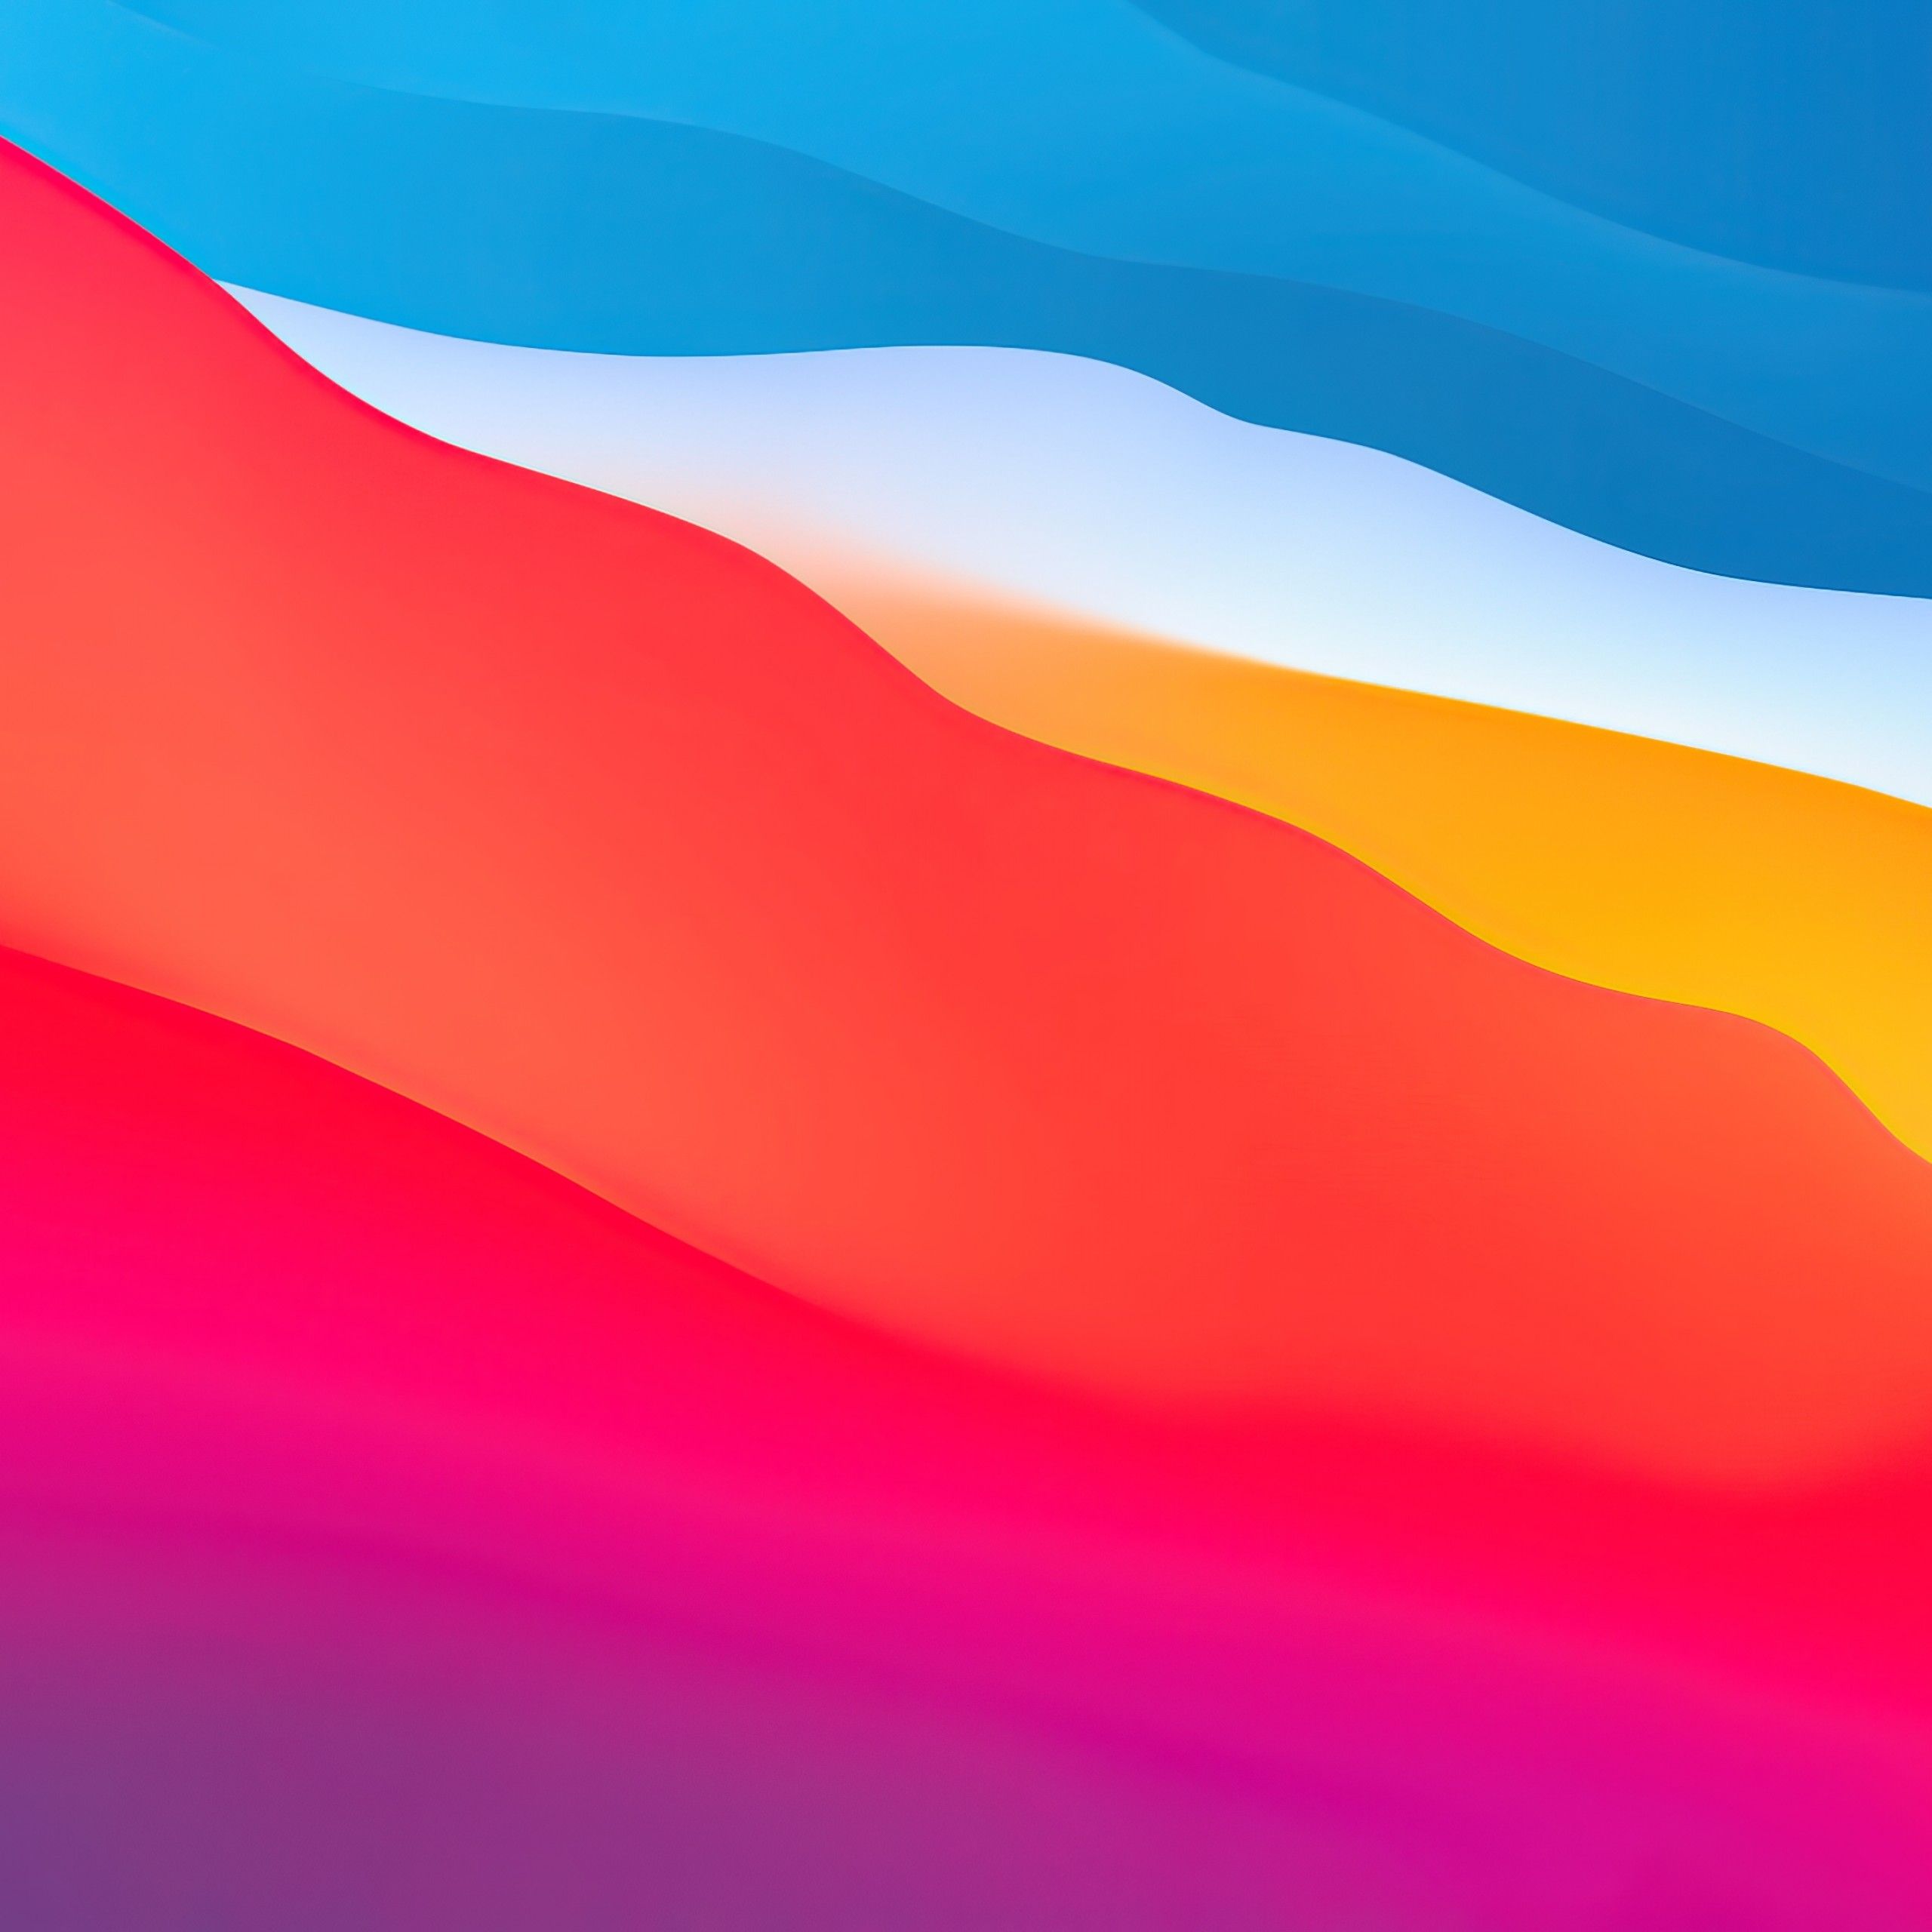 macOS Big Sur 4K Wallpaper, Apple, Layers, Fluidic, Colorful, WWDC, Stock, Aesthetic, Gradients